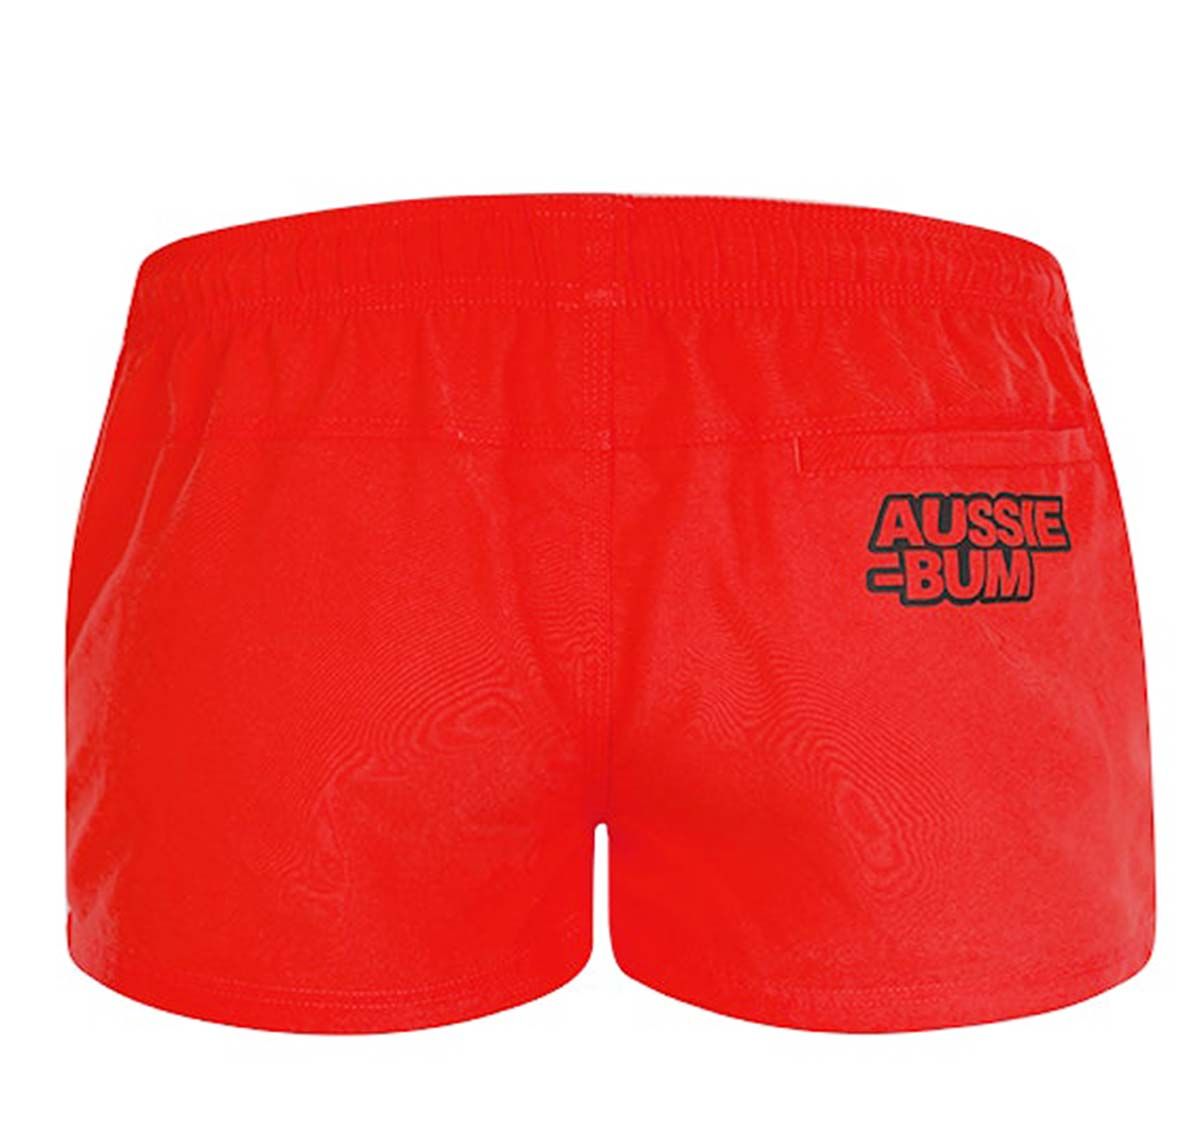 aussieBum swim shorts REEF RED Shorts, red